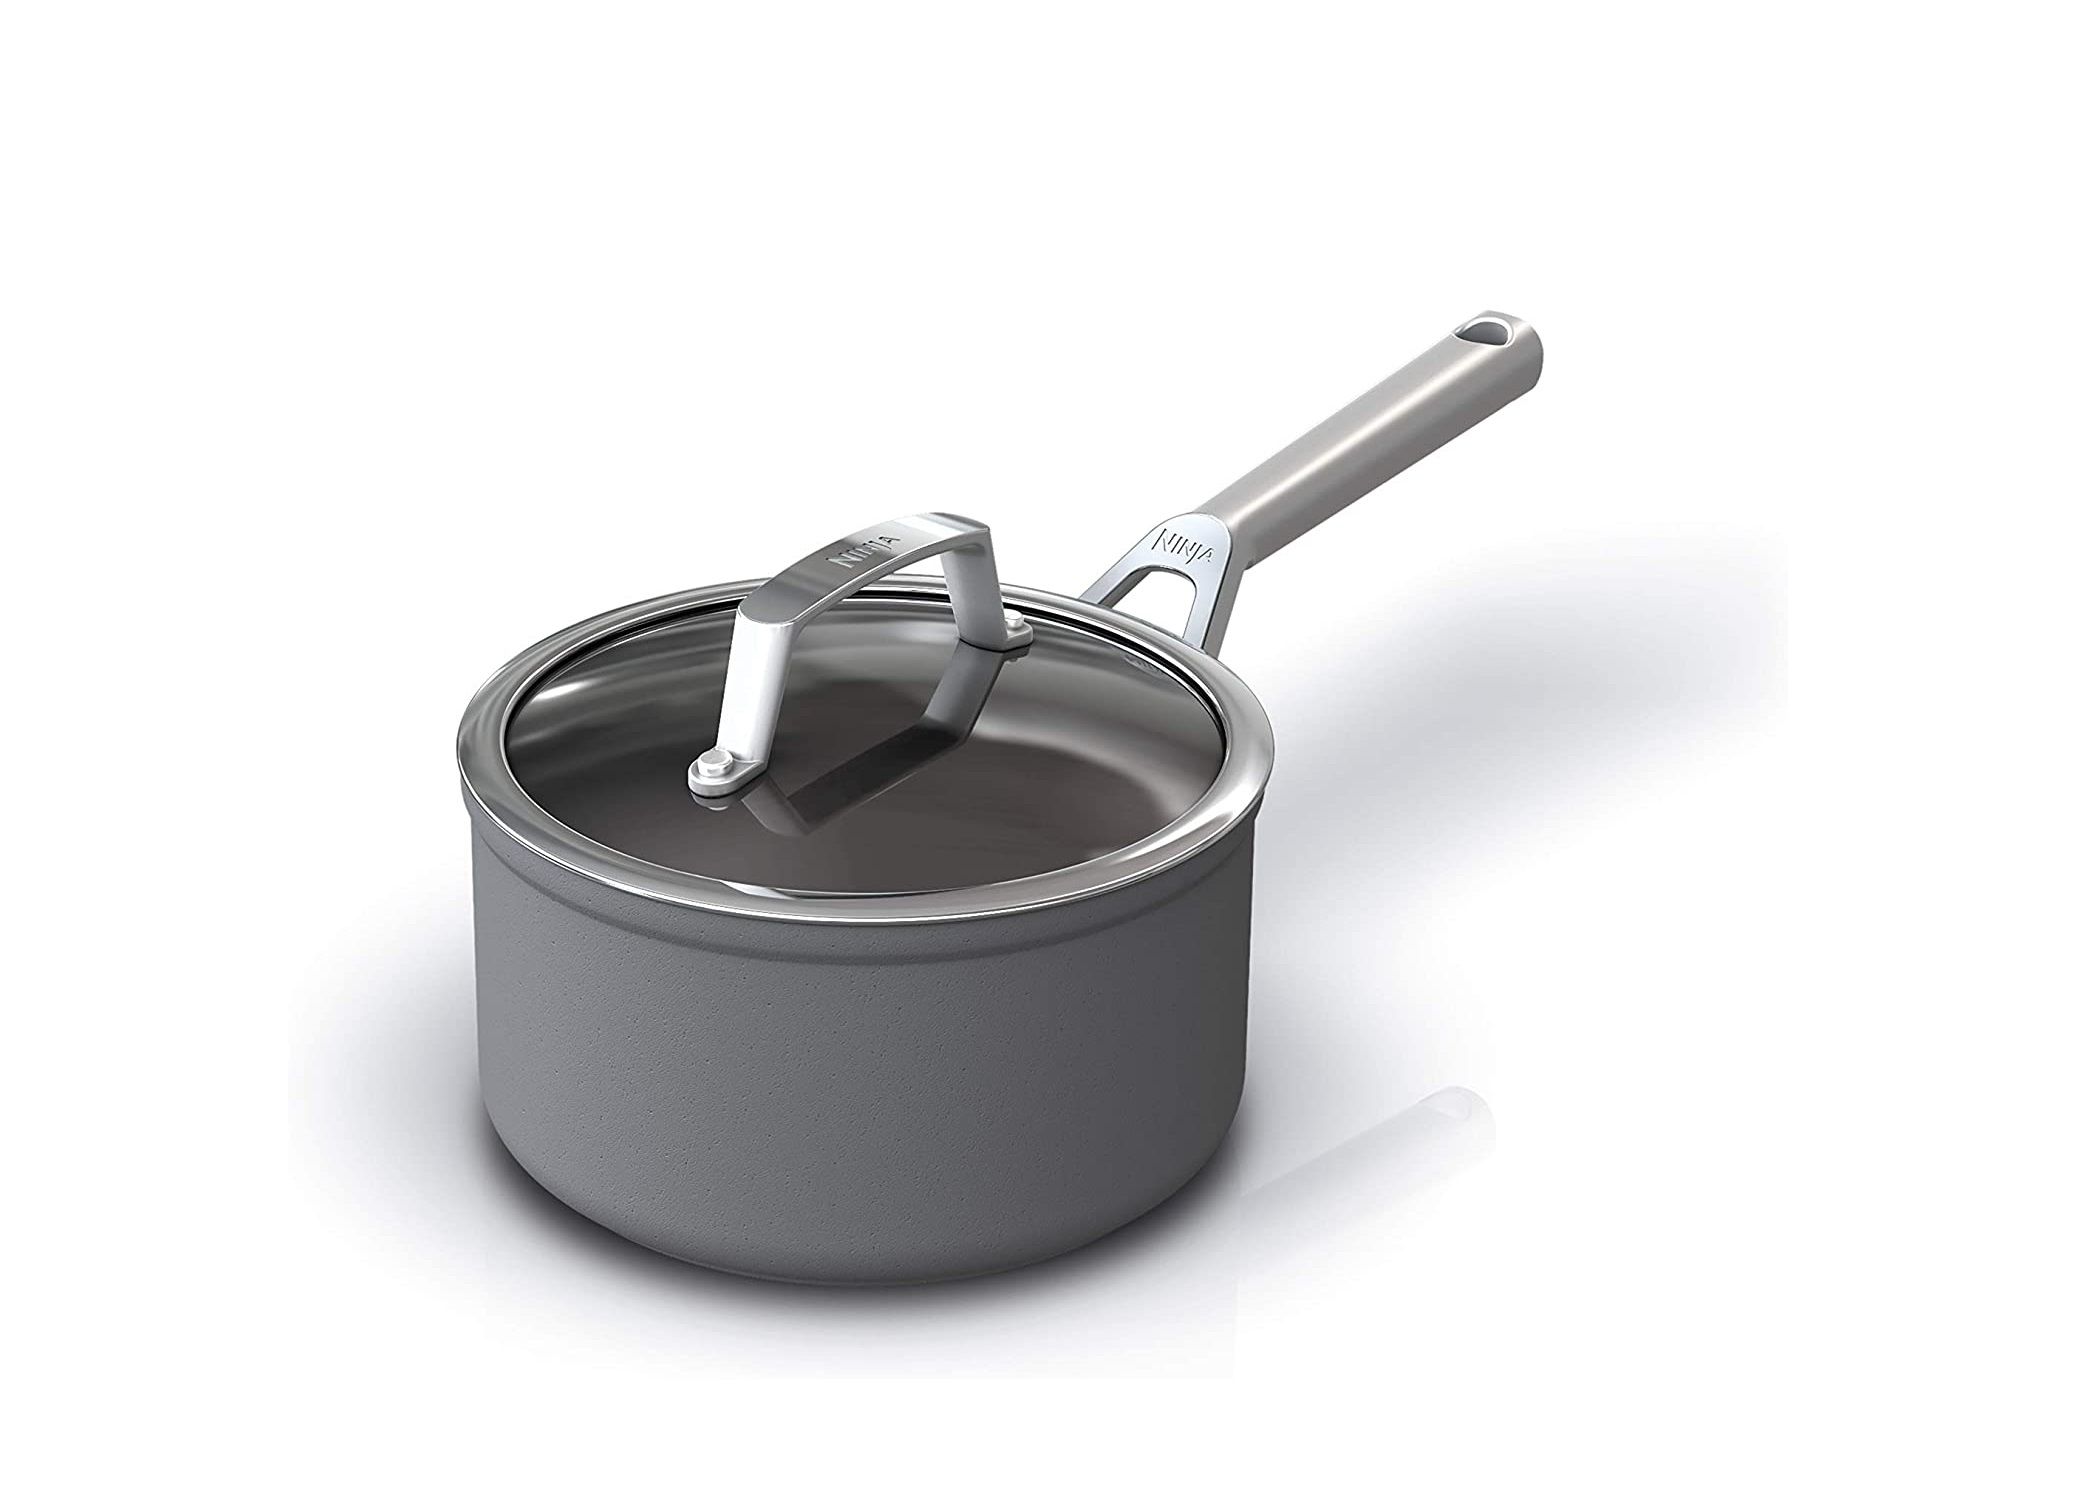 Fingerhut - KitchenAid 11-Pc. Nonstick Hard-Anodized Aluminum Induction  Cookware Set